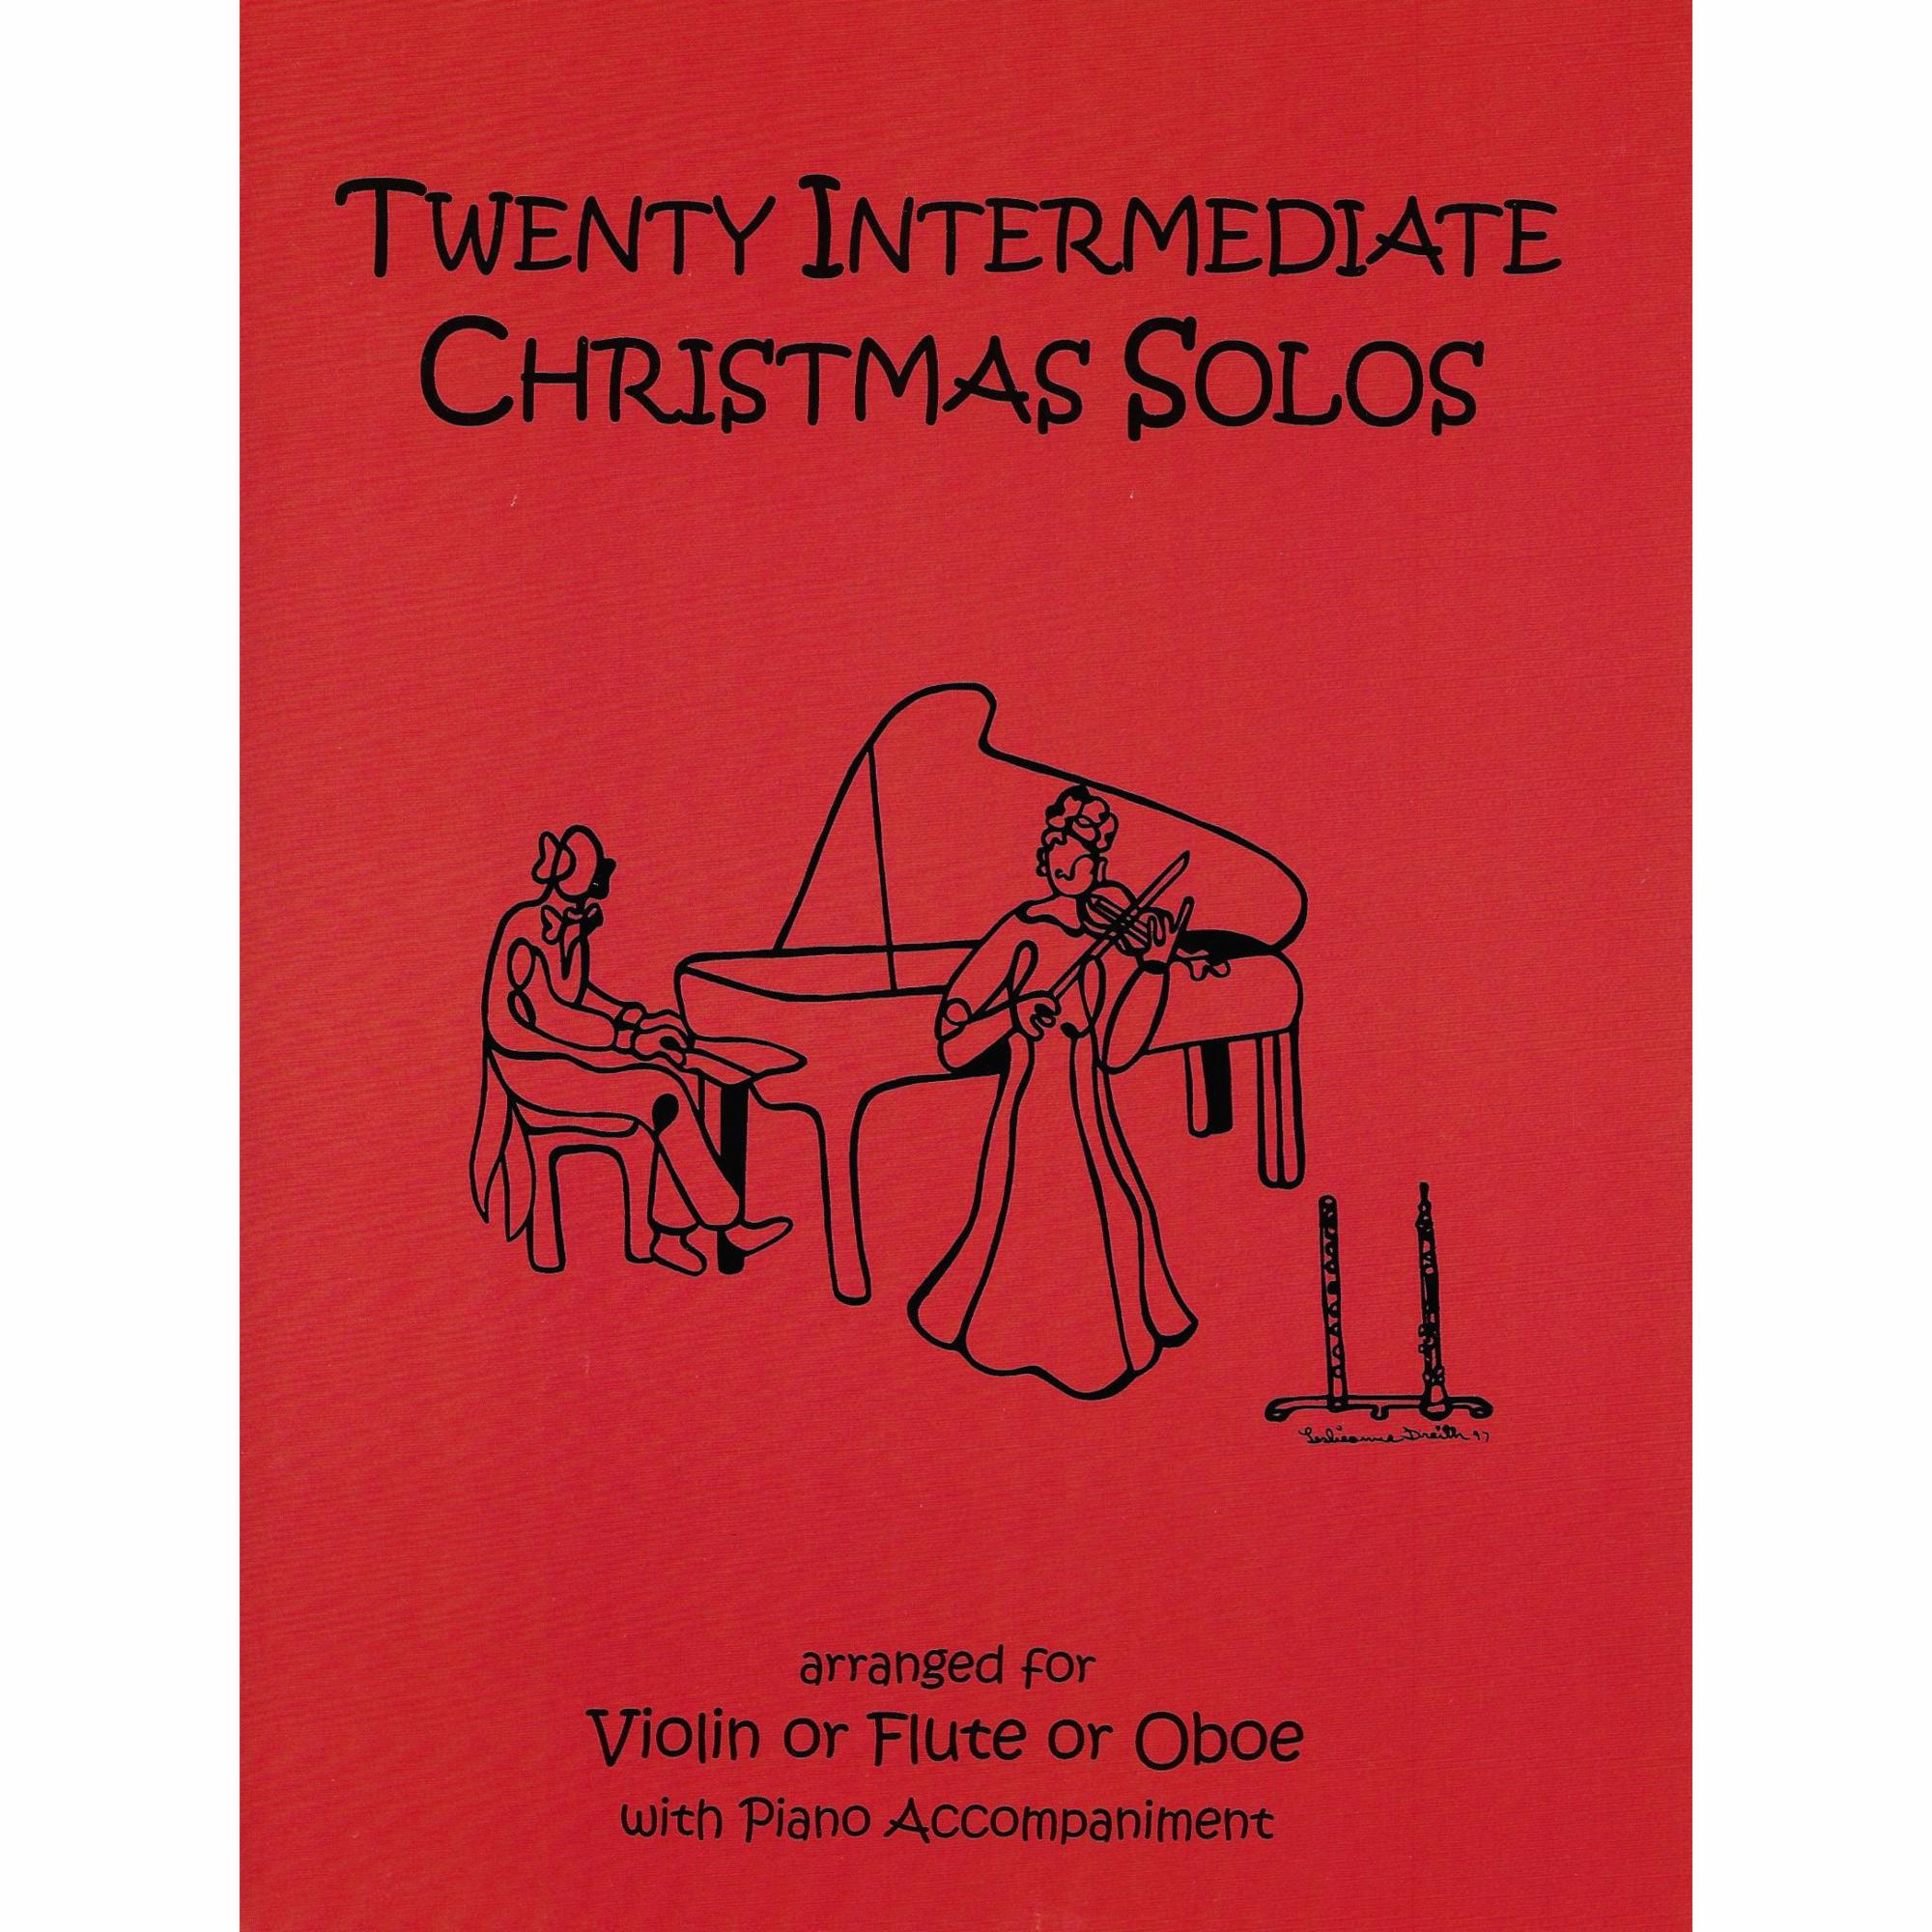 Twenty Intermediate Christmas Solos for Violin, Viola, or Cello and Piano